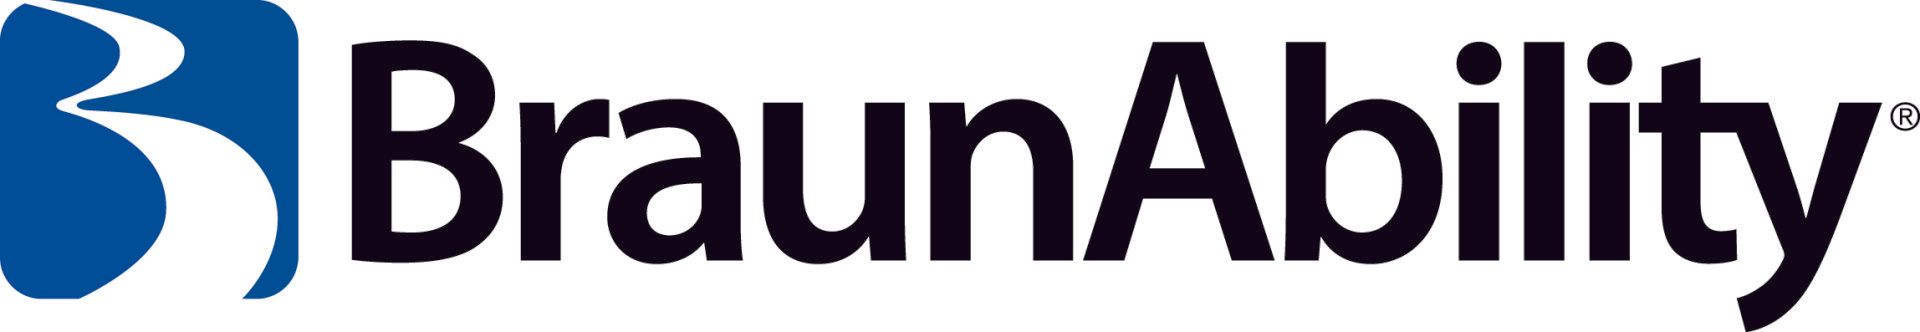 BraunAbility logo